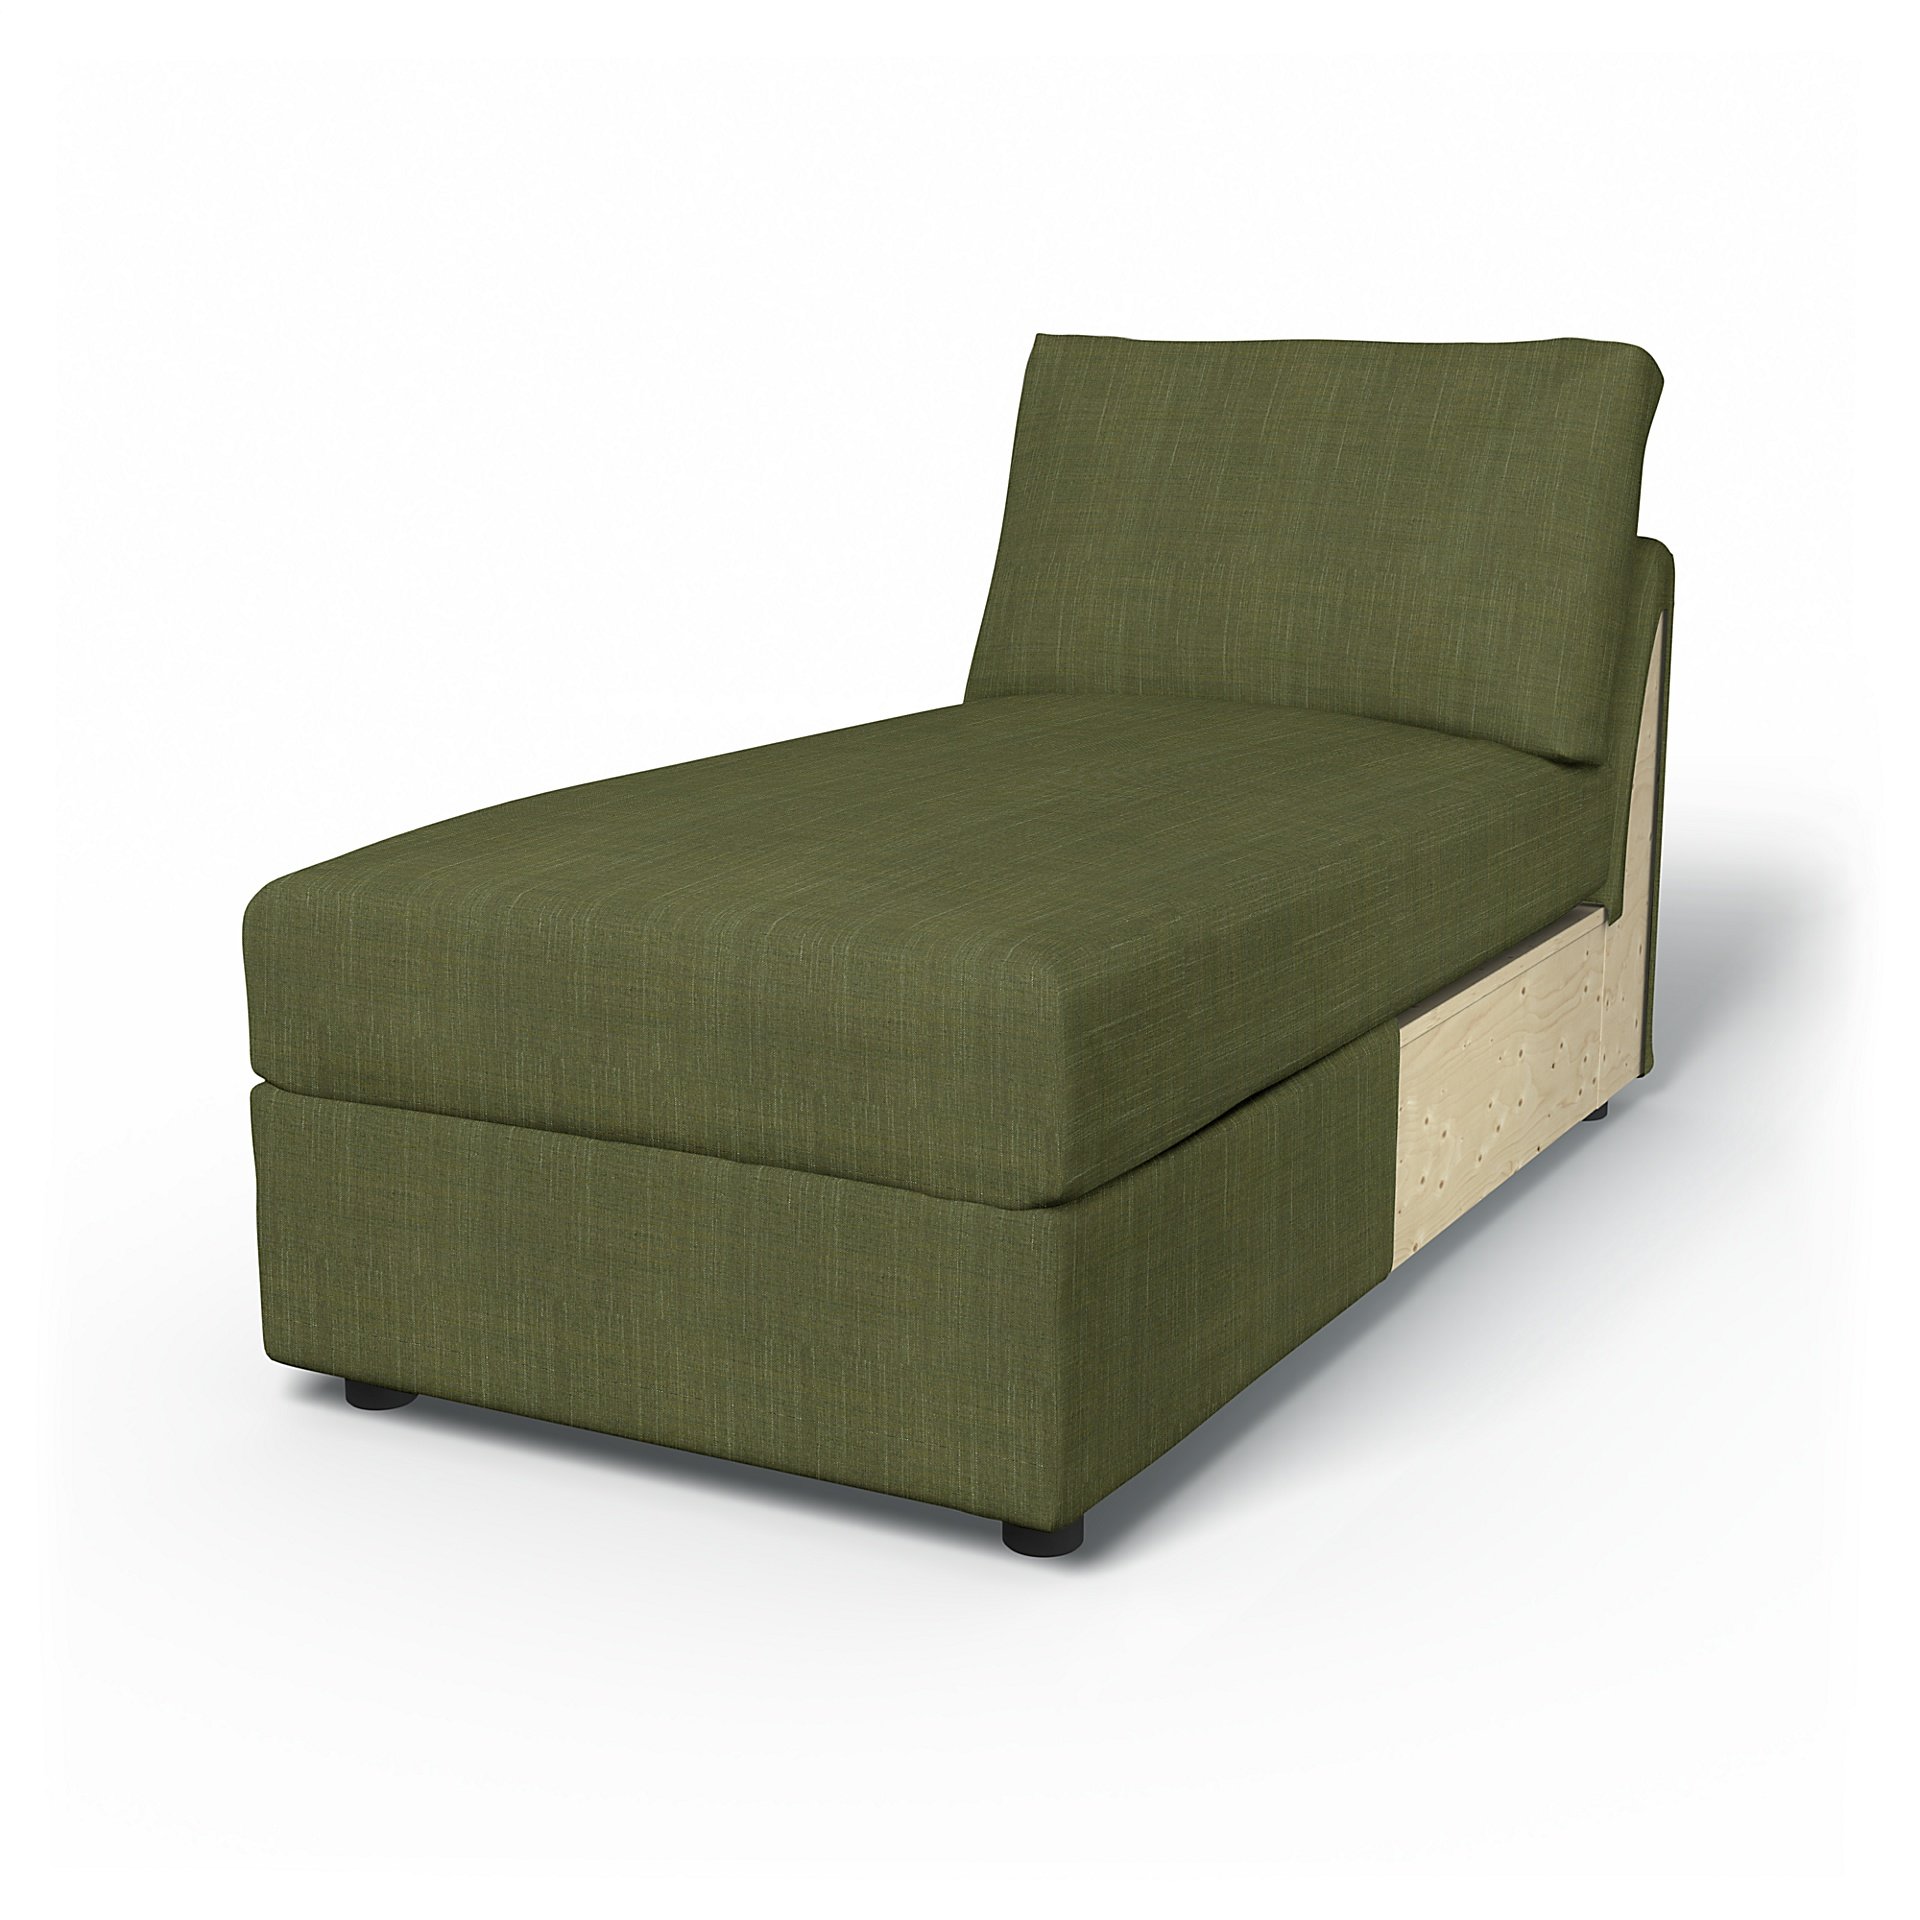 IKEA - Vimle Chaise Longue Cover, Moss Green, Boucle & Texture - Bemz